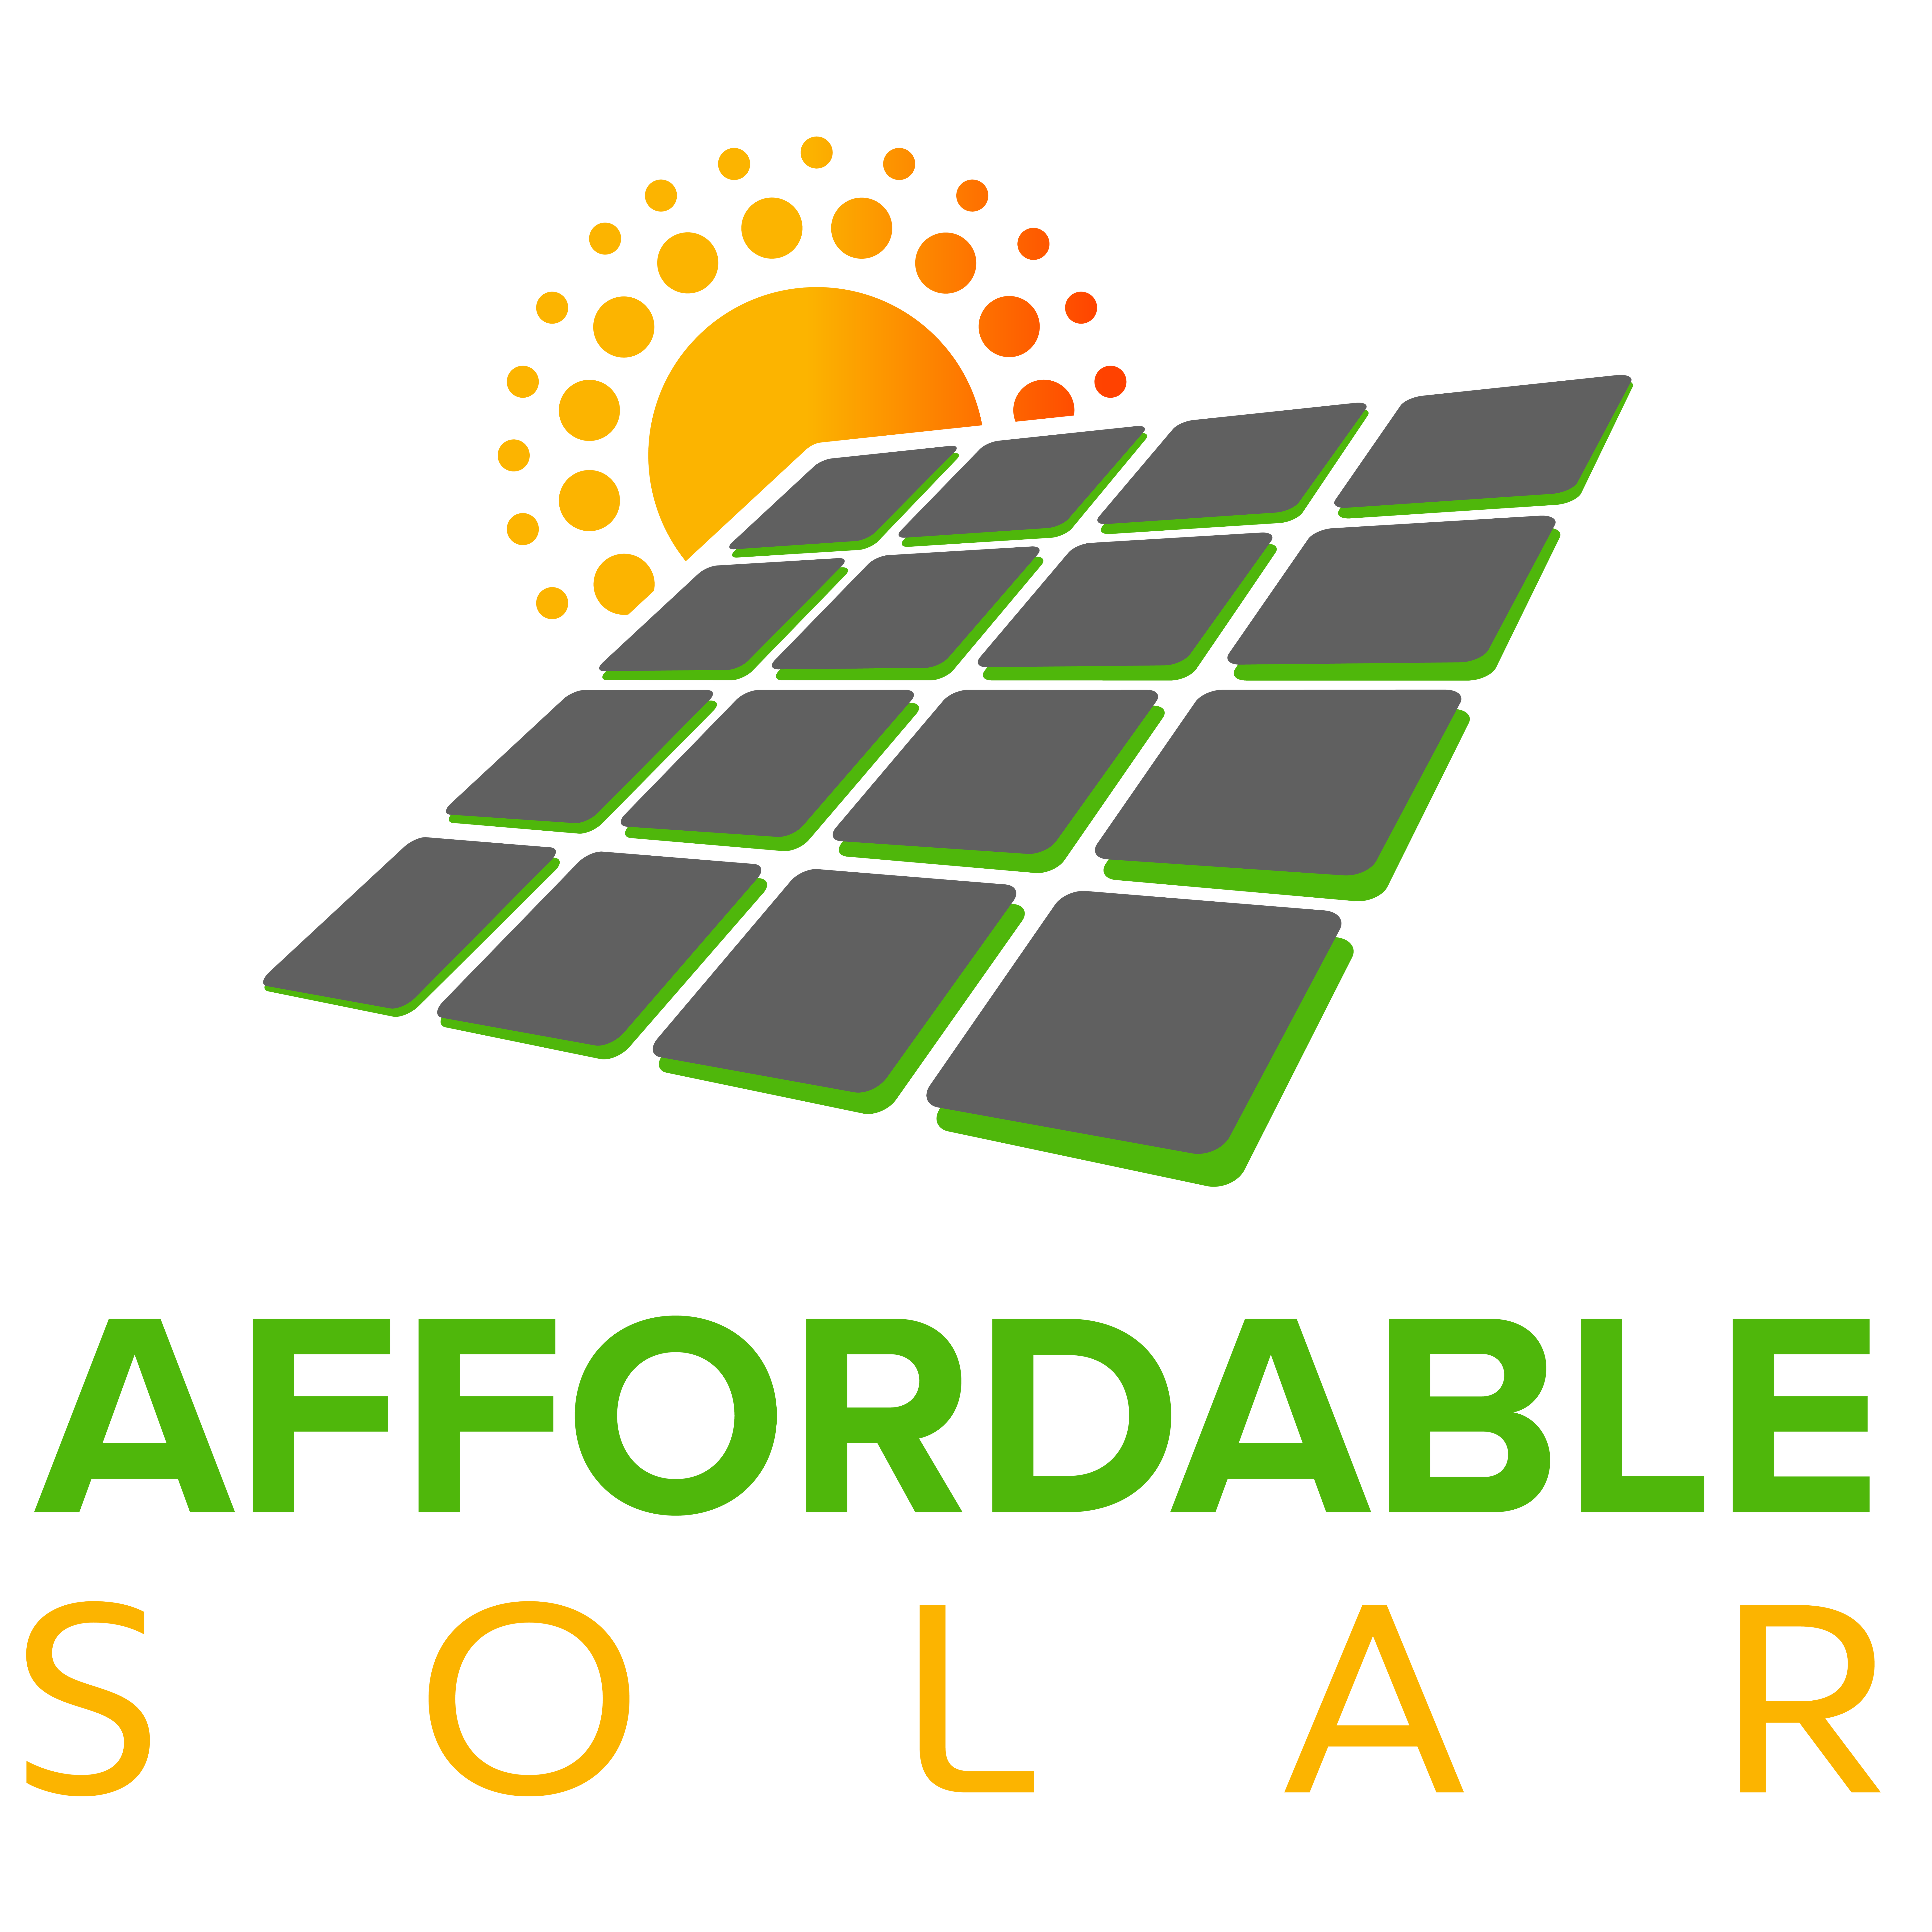 Affordable Solar, LLC solar reviews, complaints, address & solar panels cost